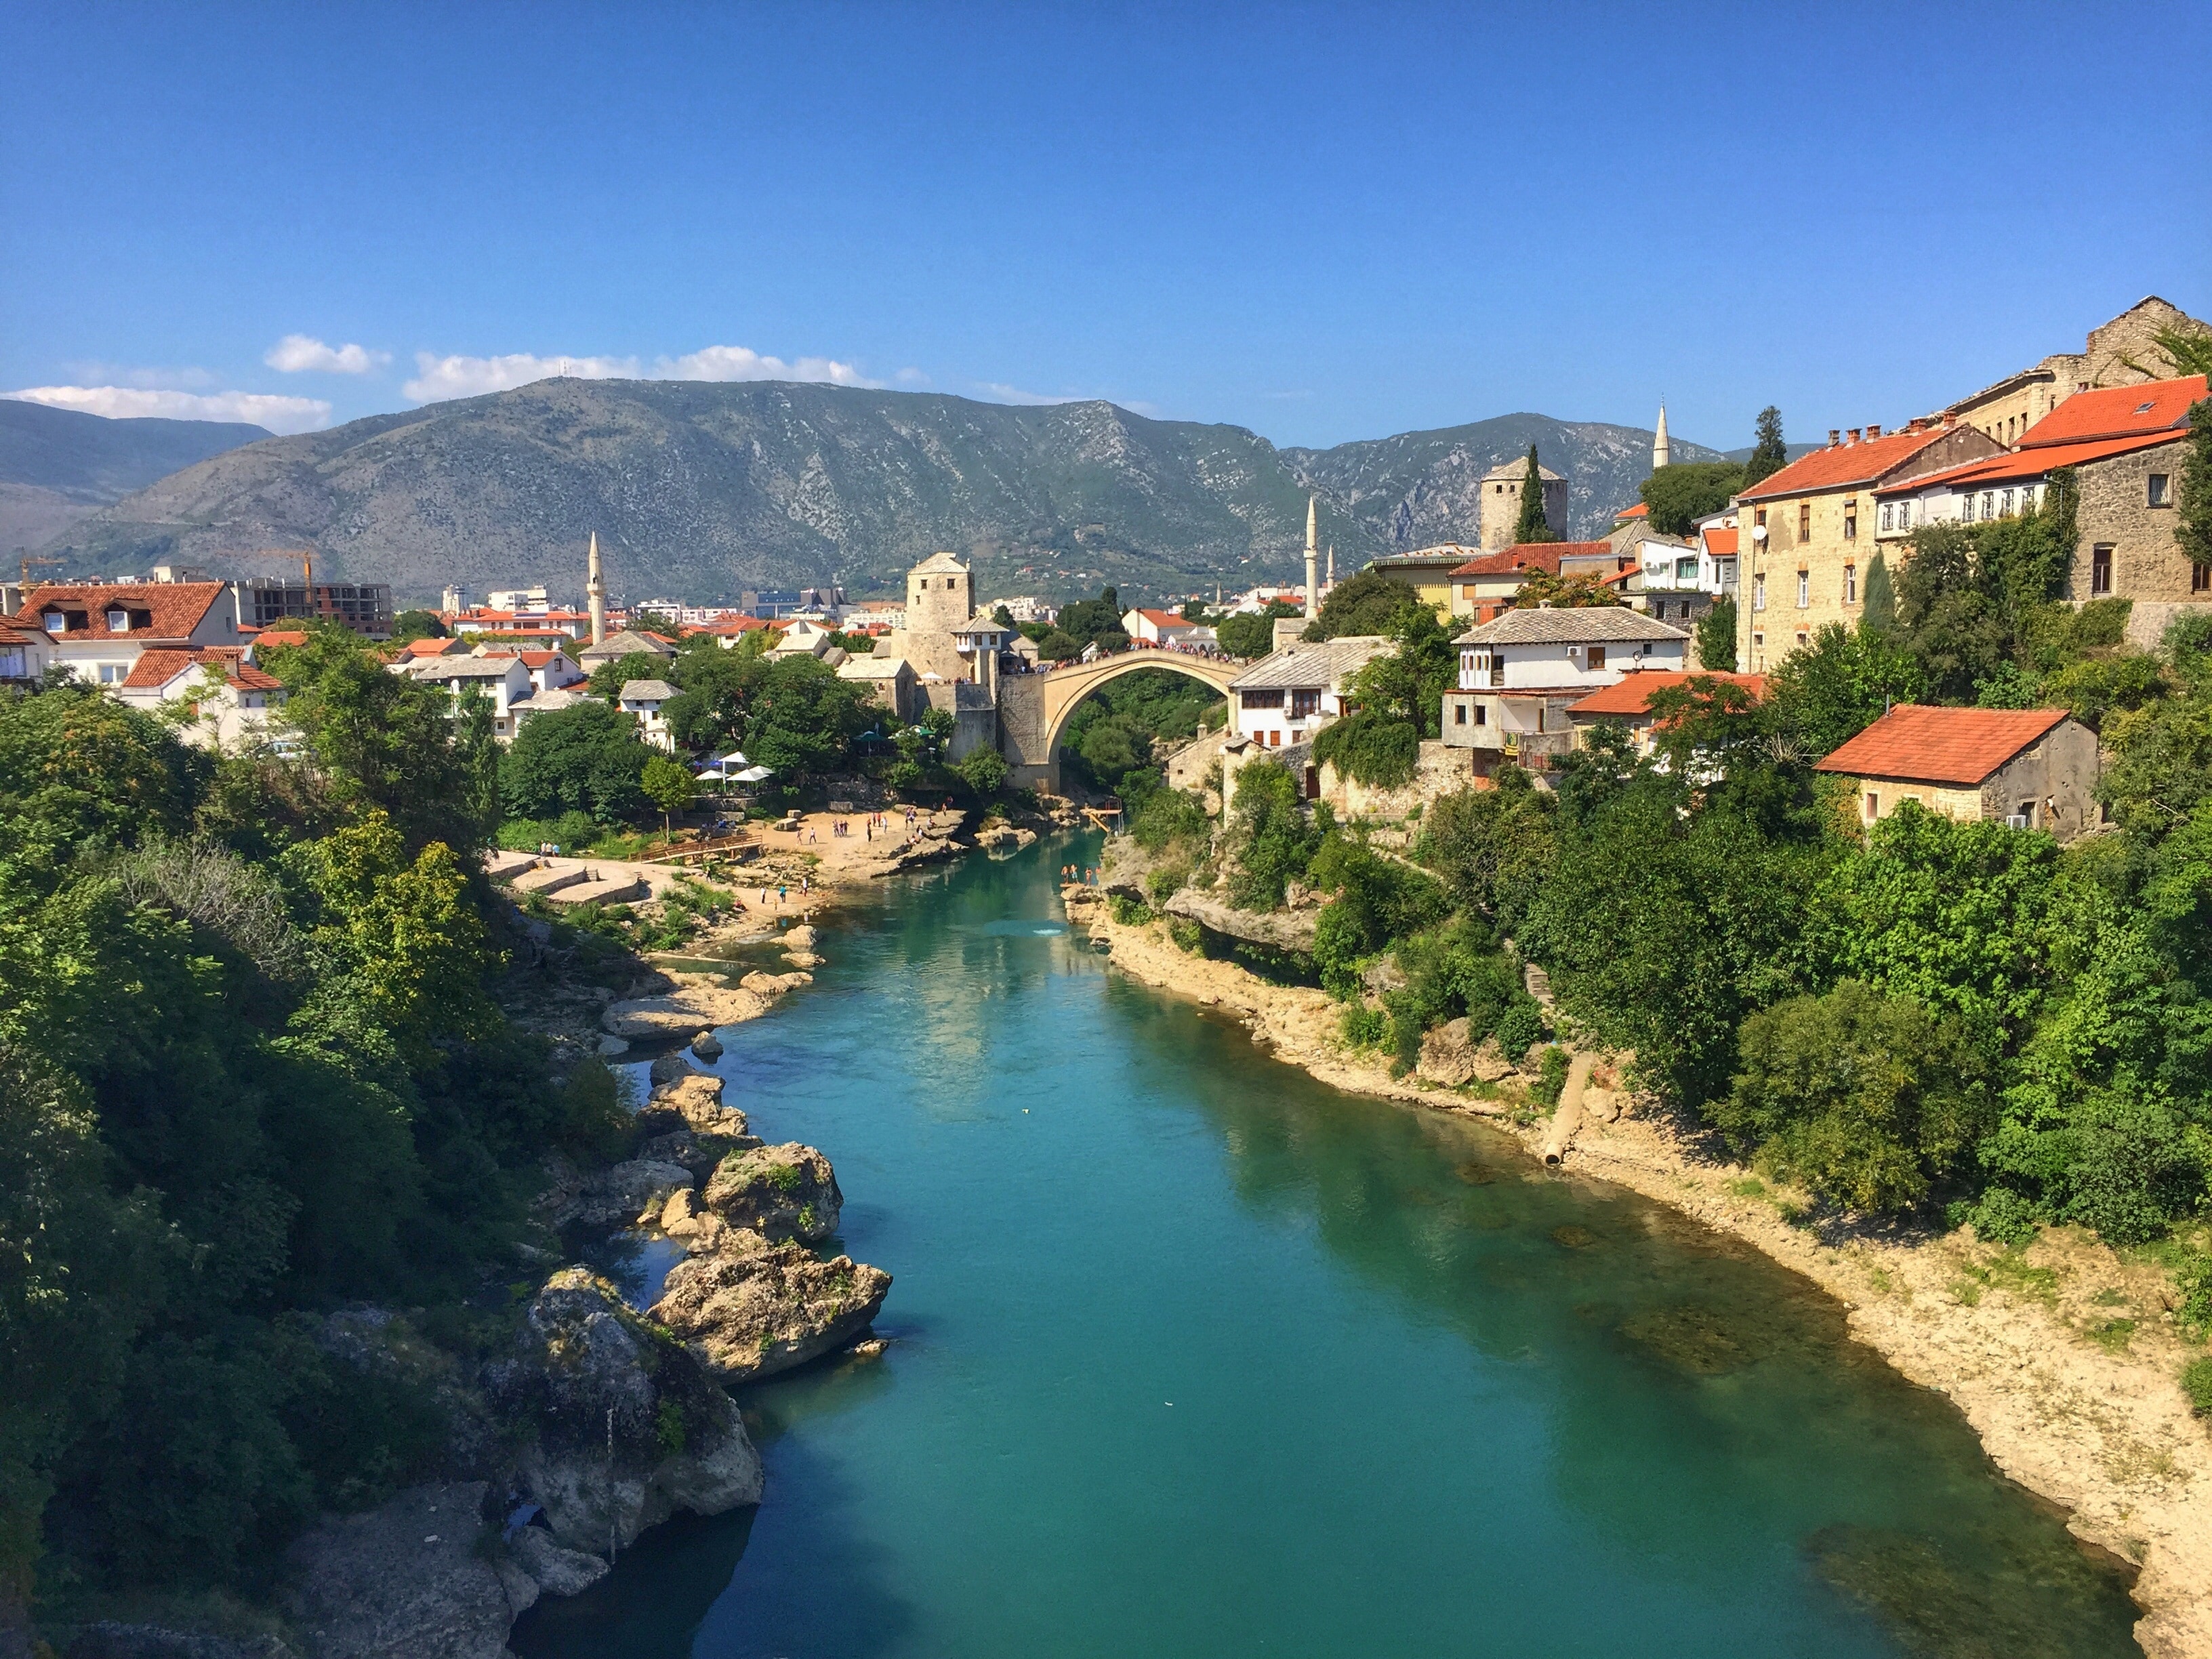 Bridge, Bosnia, City, River, Outlook, architecture, house